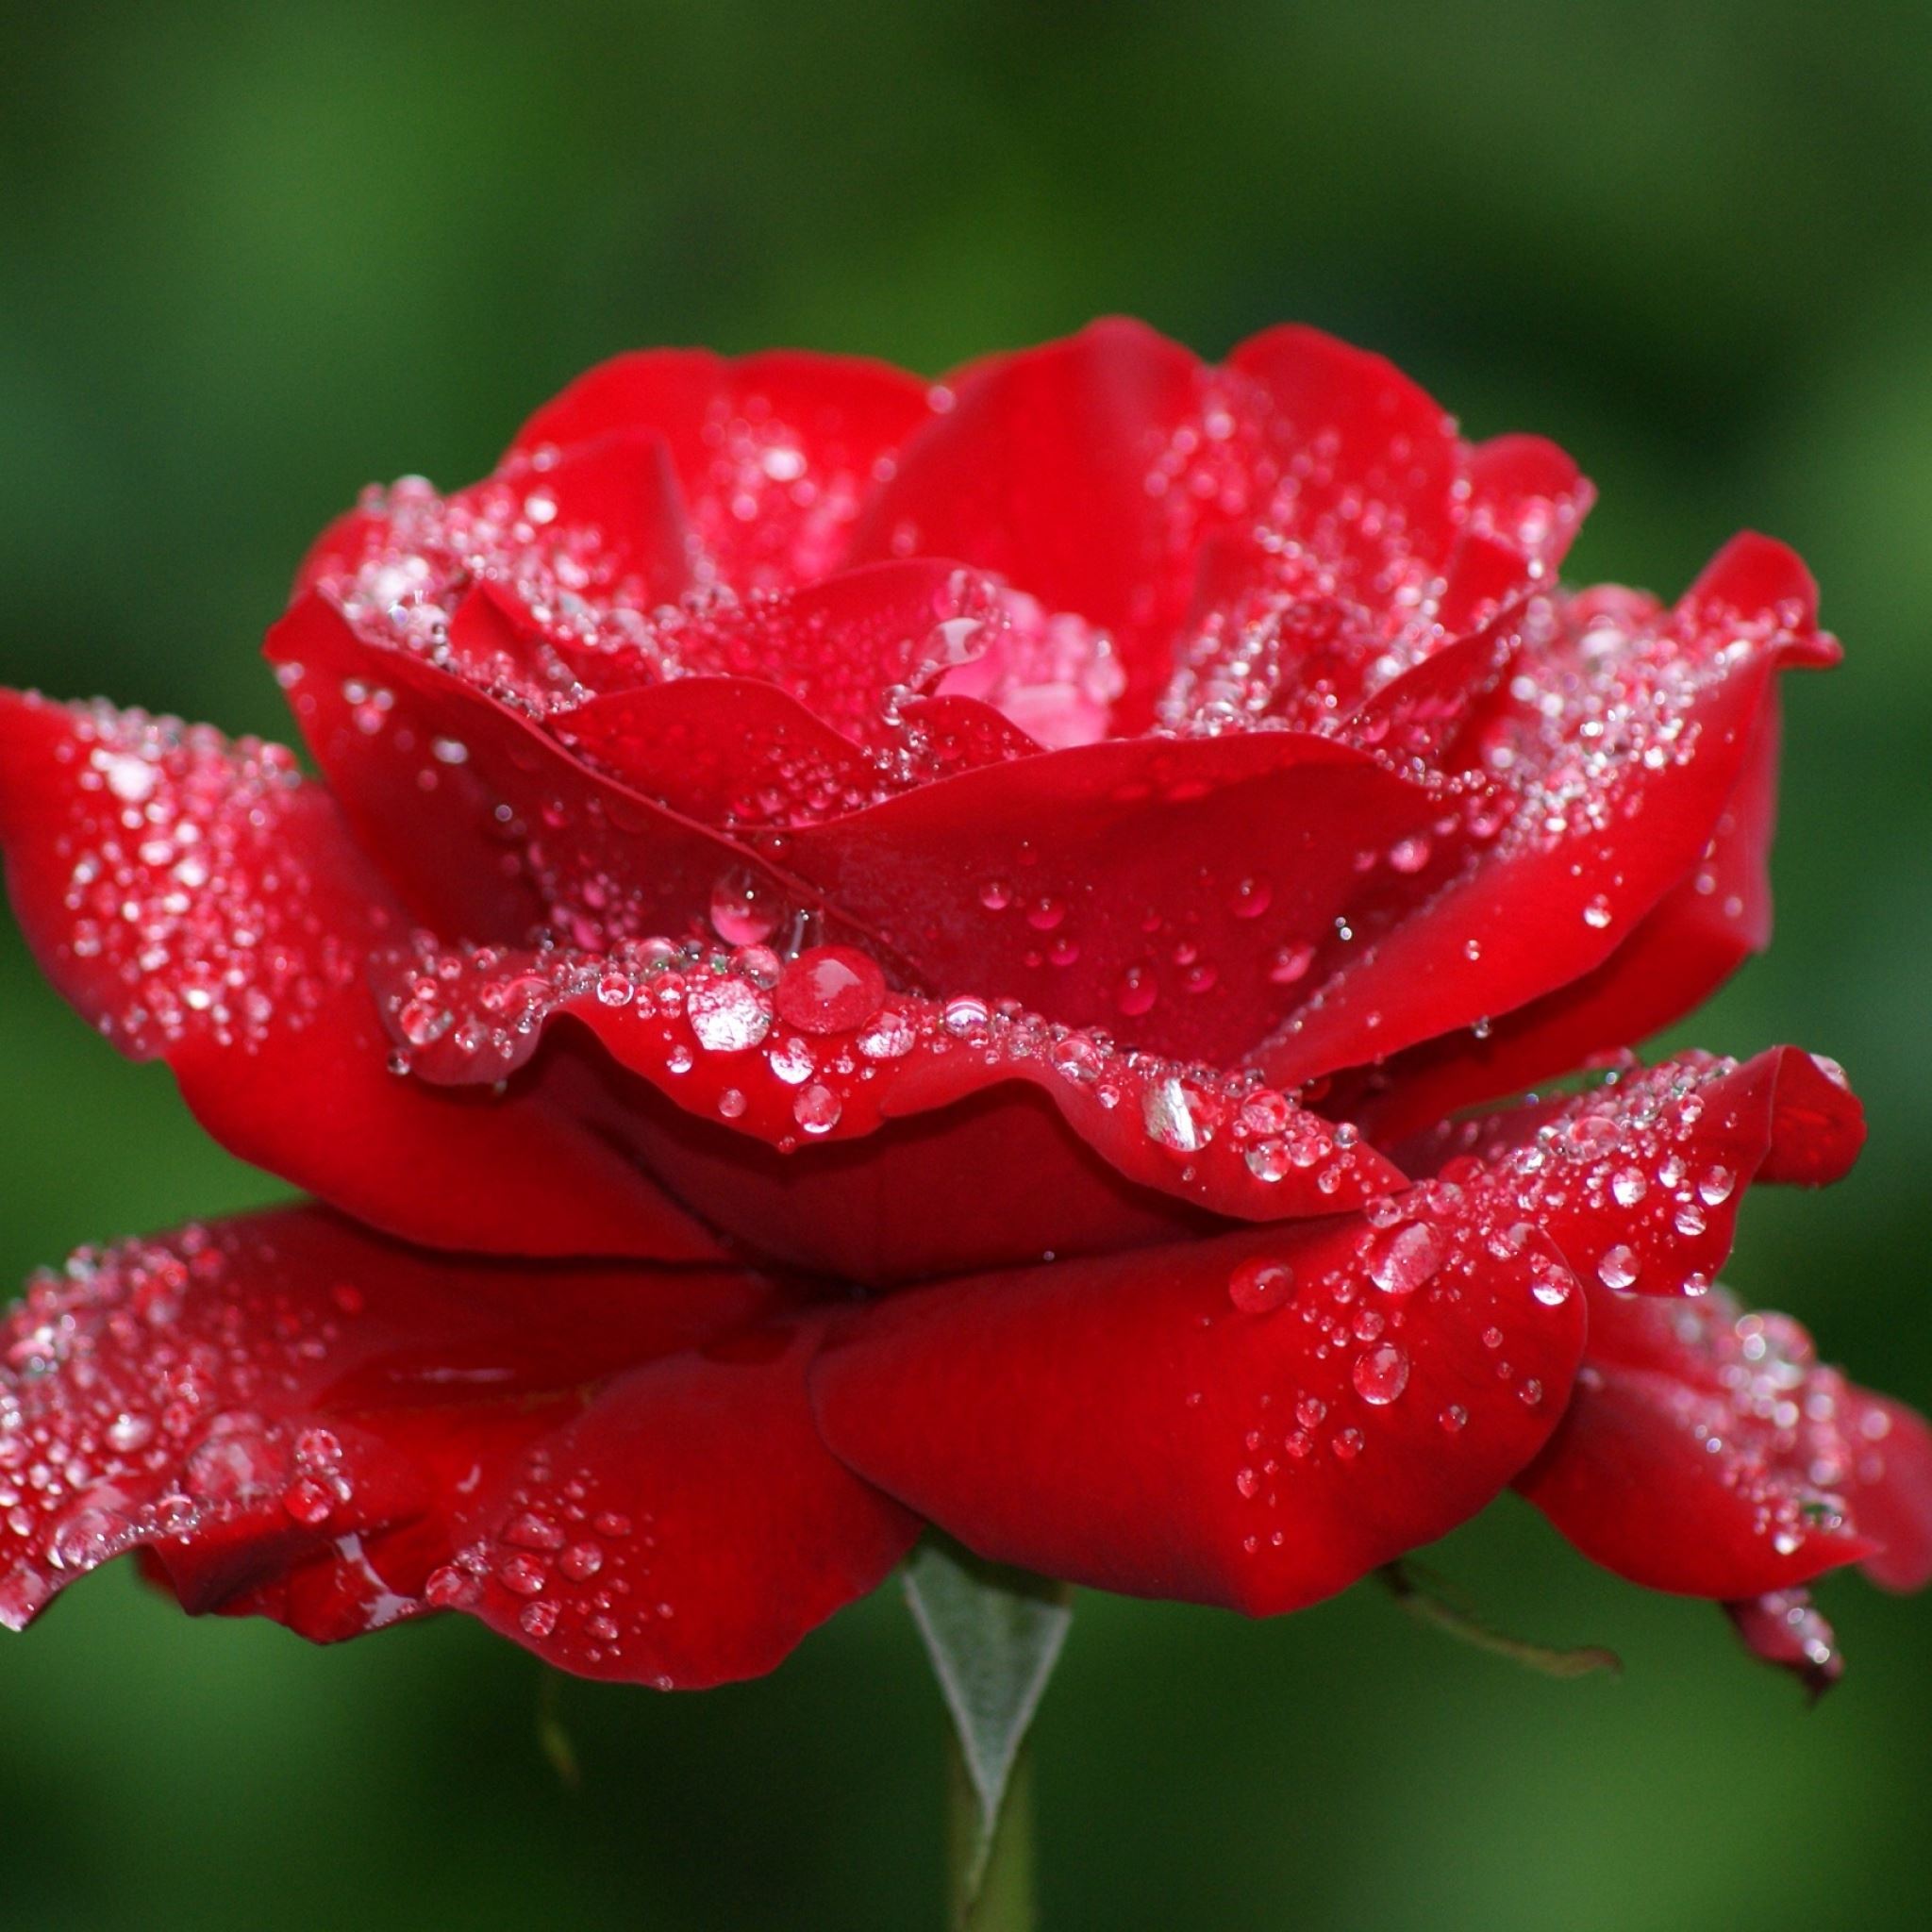 Flower rose dew drops iPad Air Wallpapers Free Download